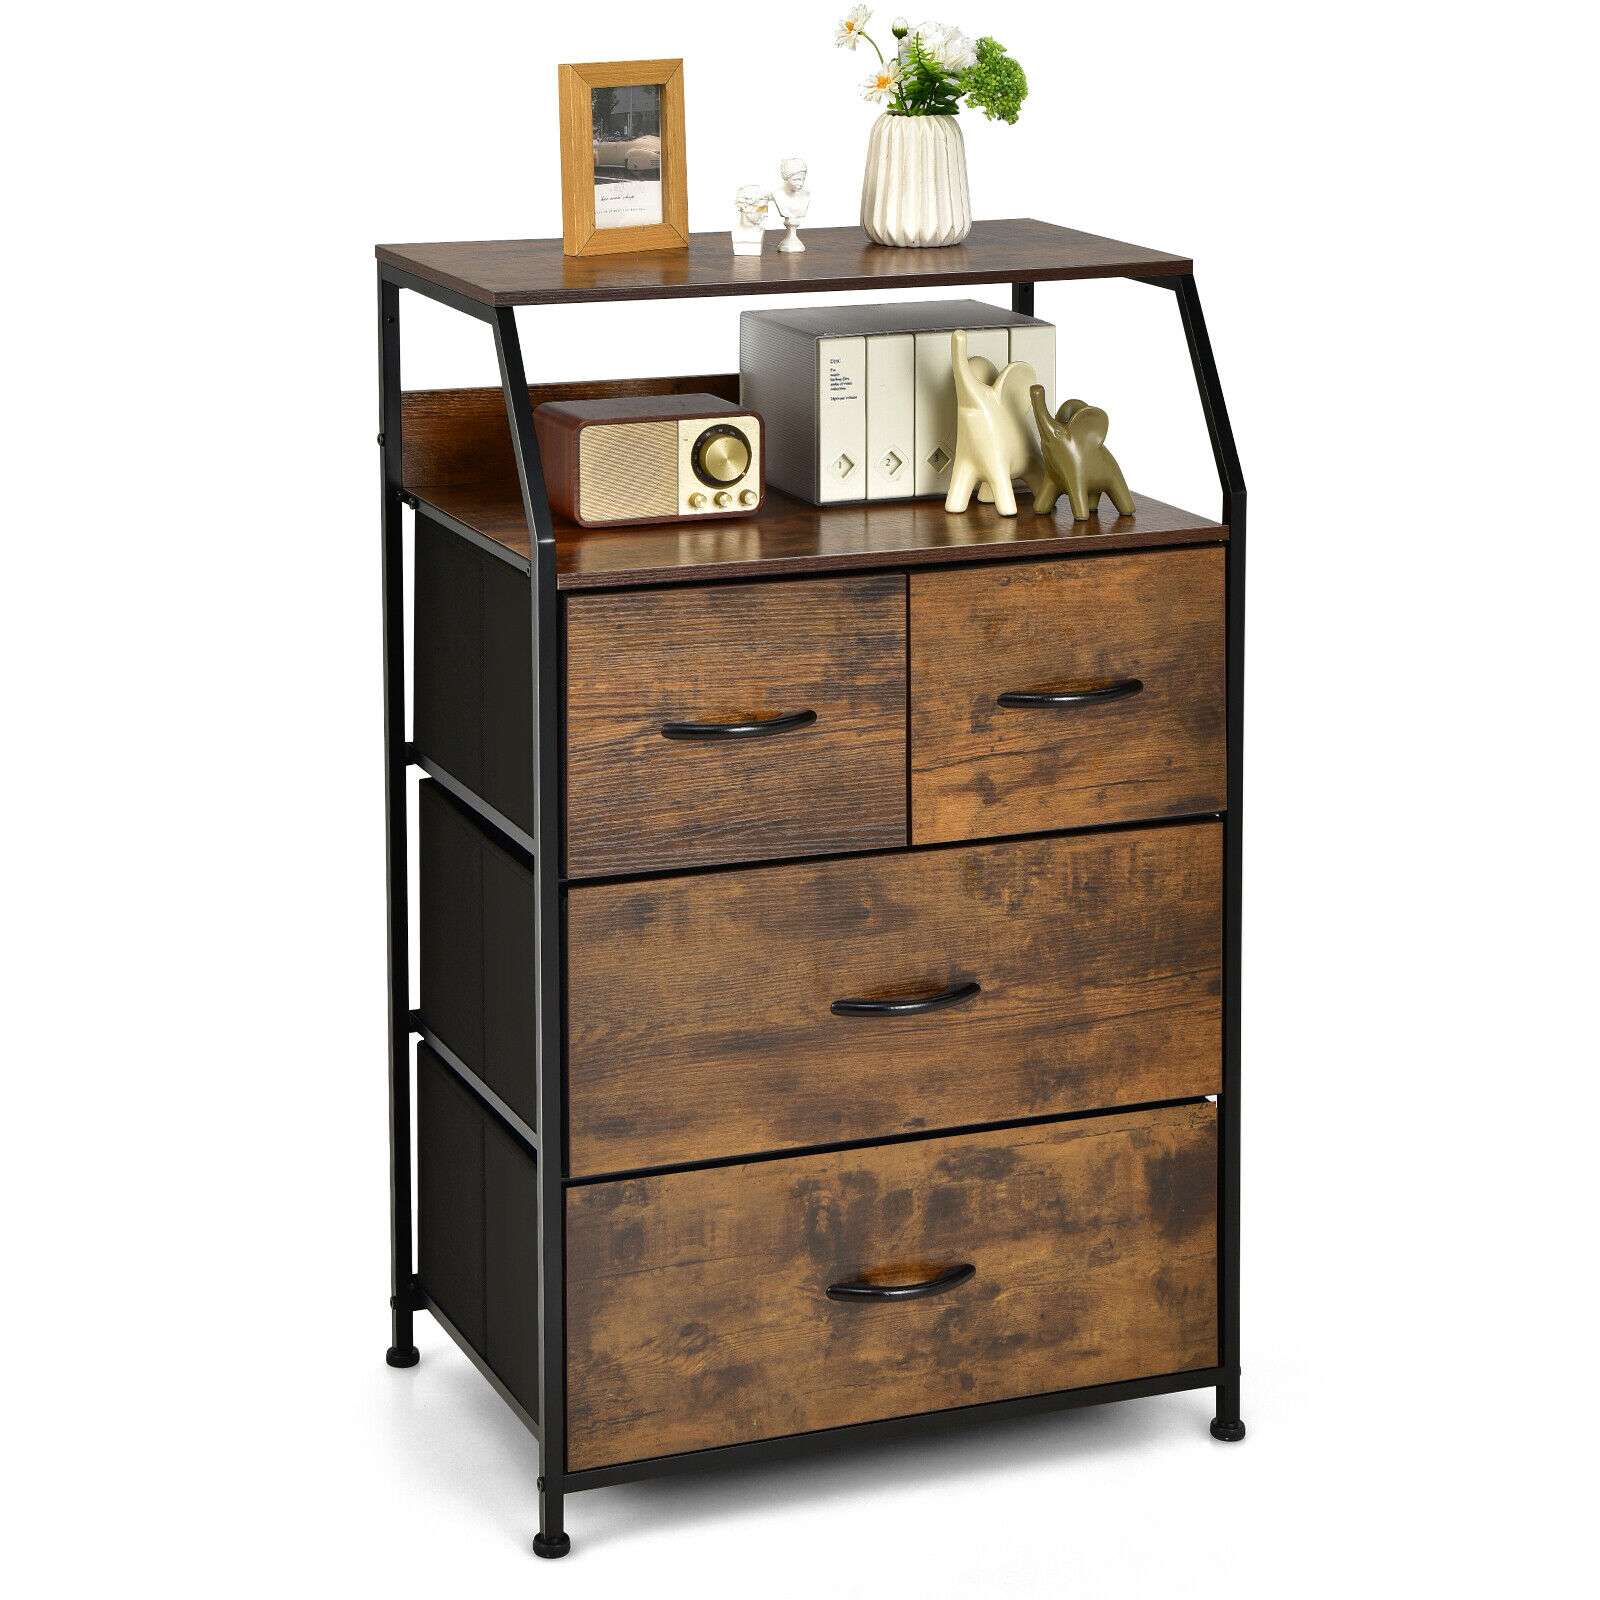 TKM Home 4 Drawer Dresser Tall Wide Storage Organizer Unit W/ Wooden Top Fabric Bins